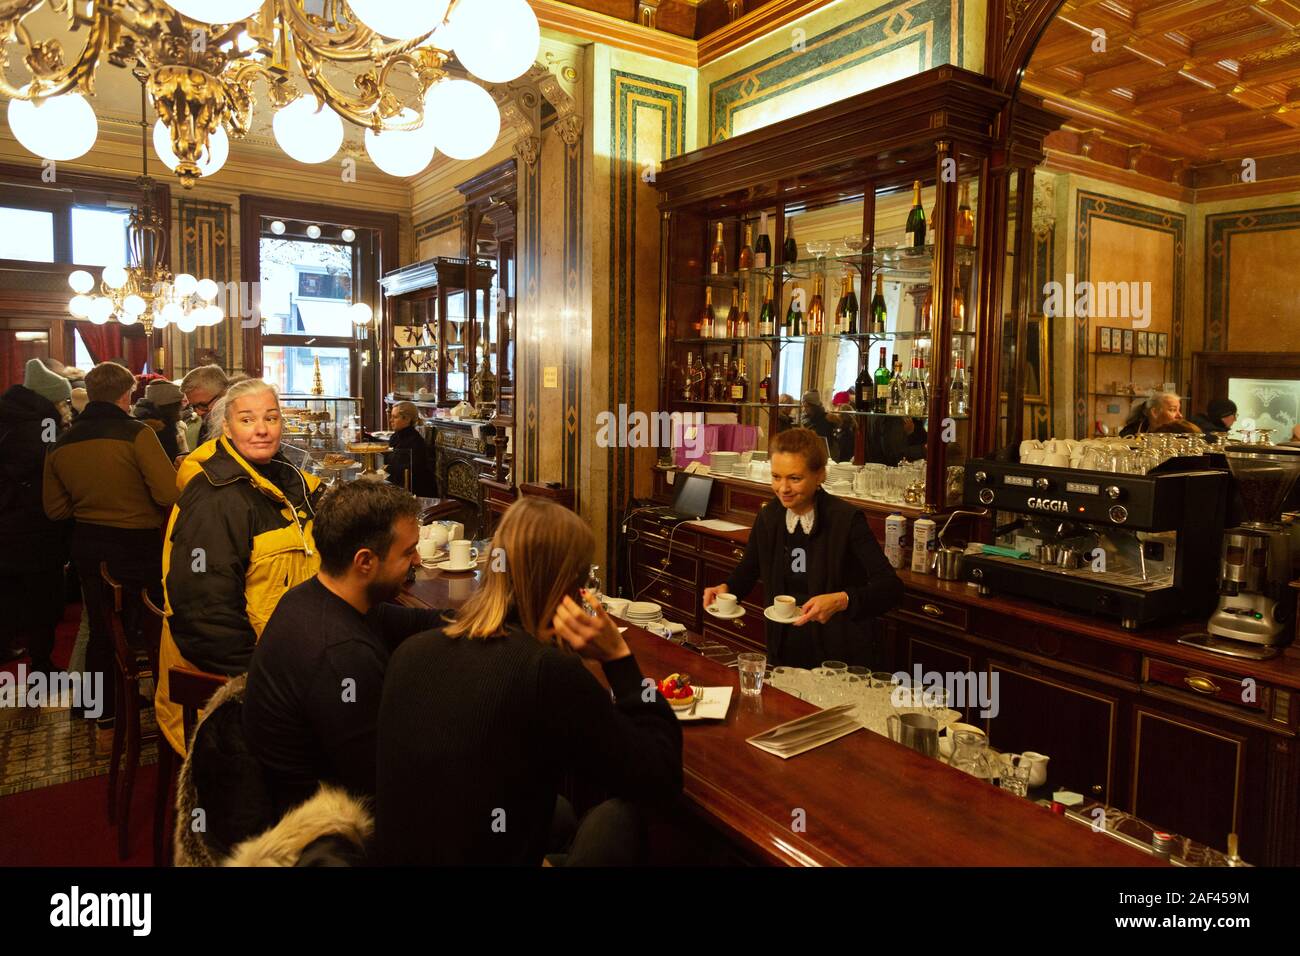 Cafe Demel Vienna interior, - people drinking coffee in the ornate Demel coffee House, Vienna Austria Europe Stock Photo